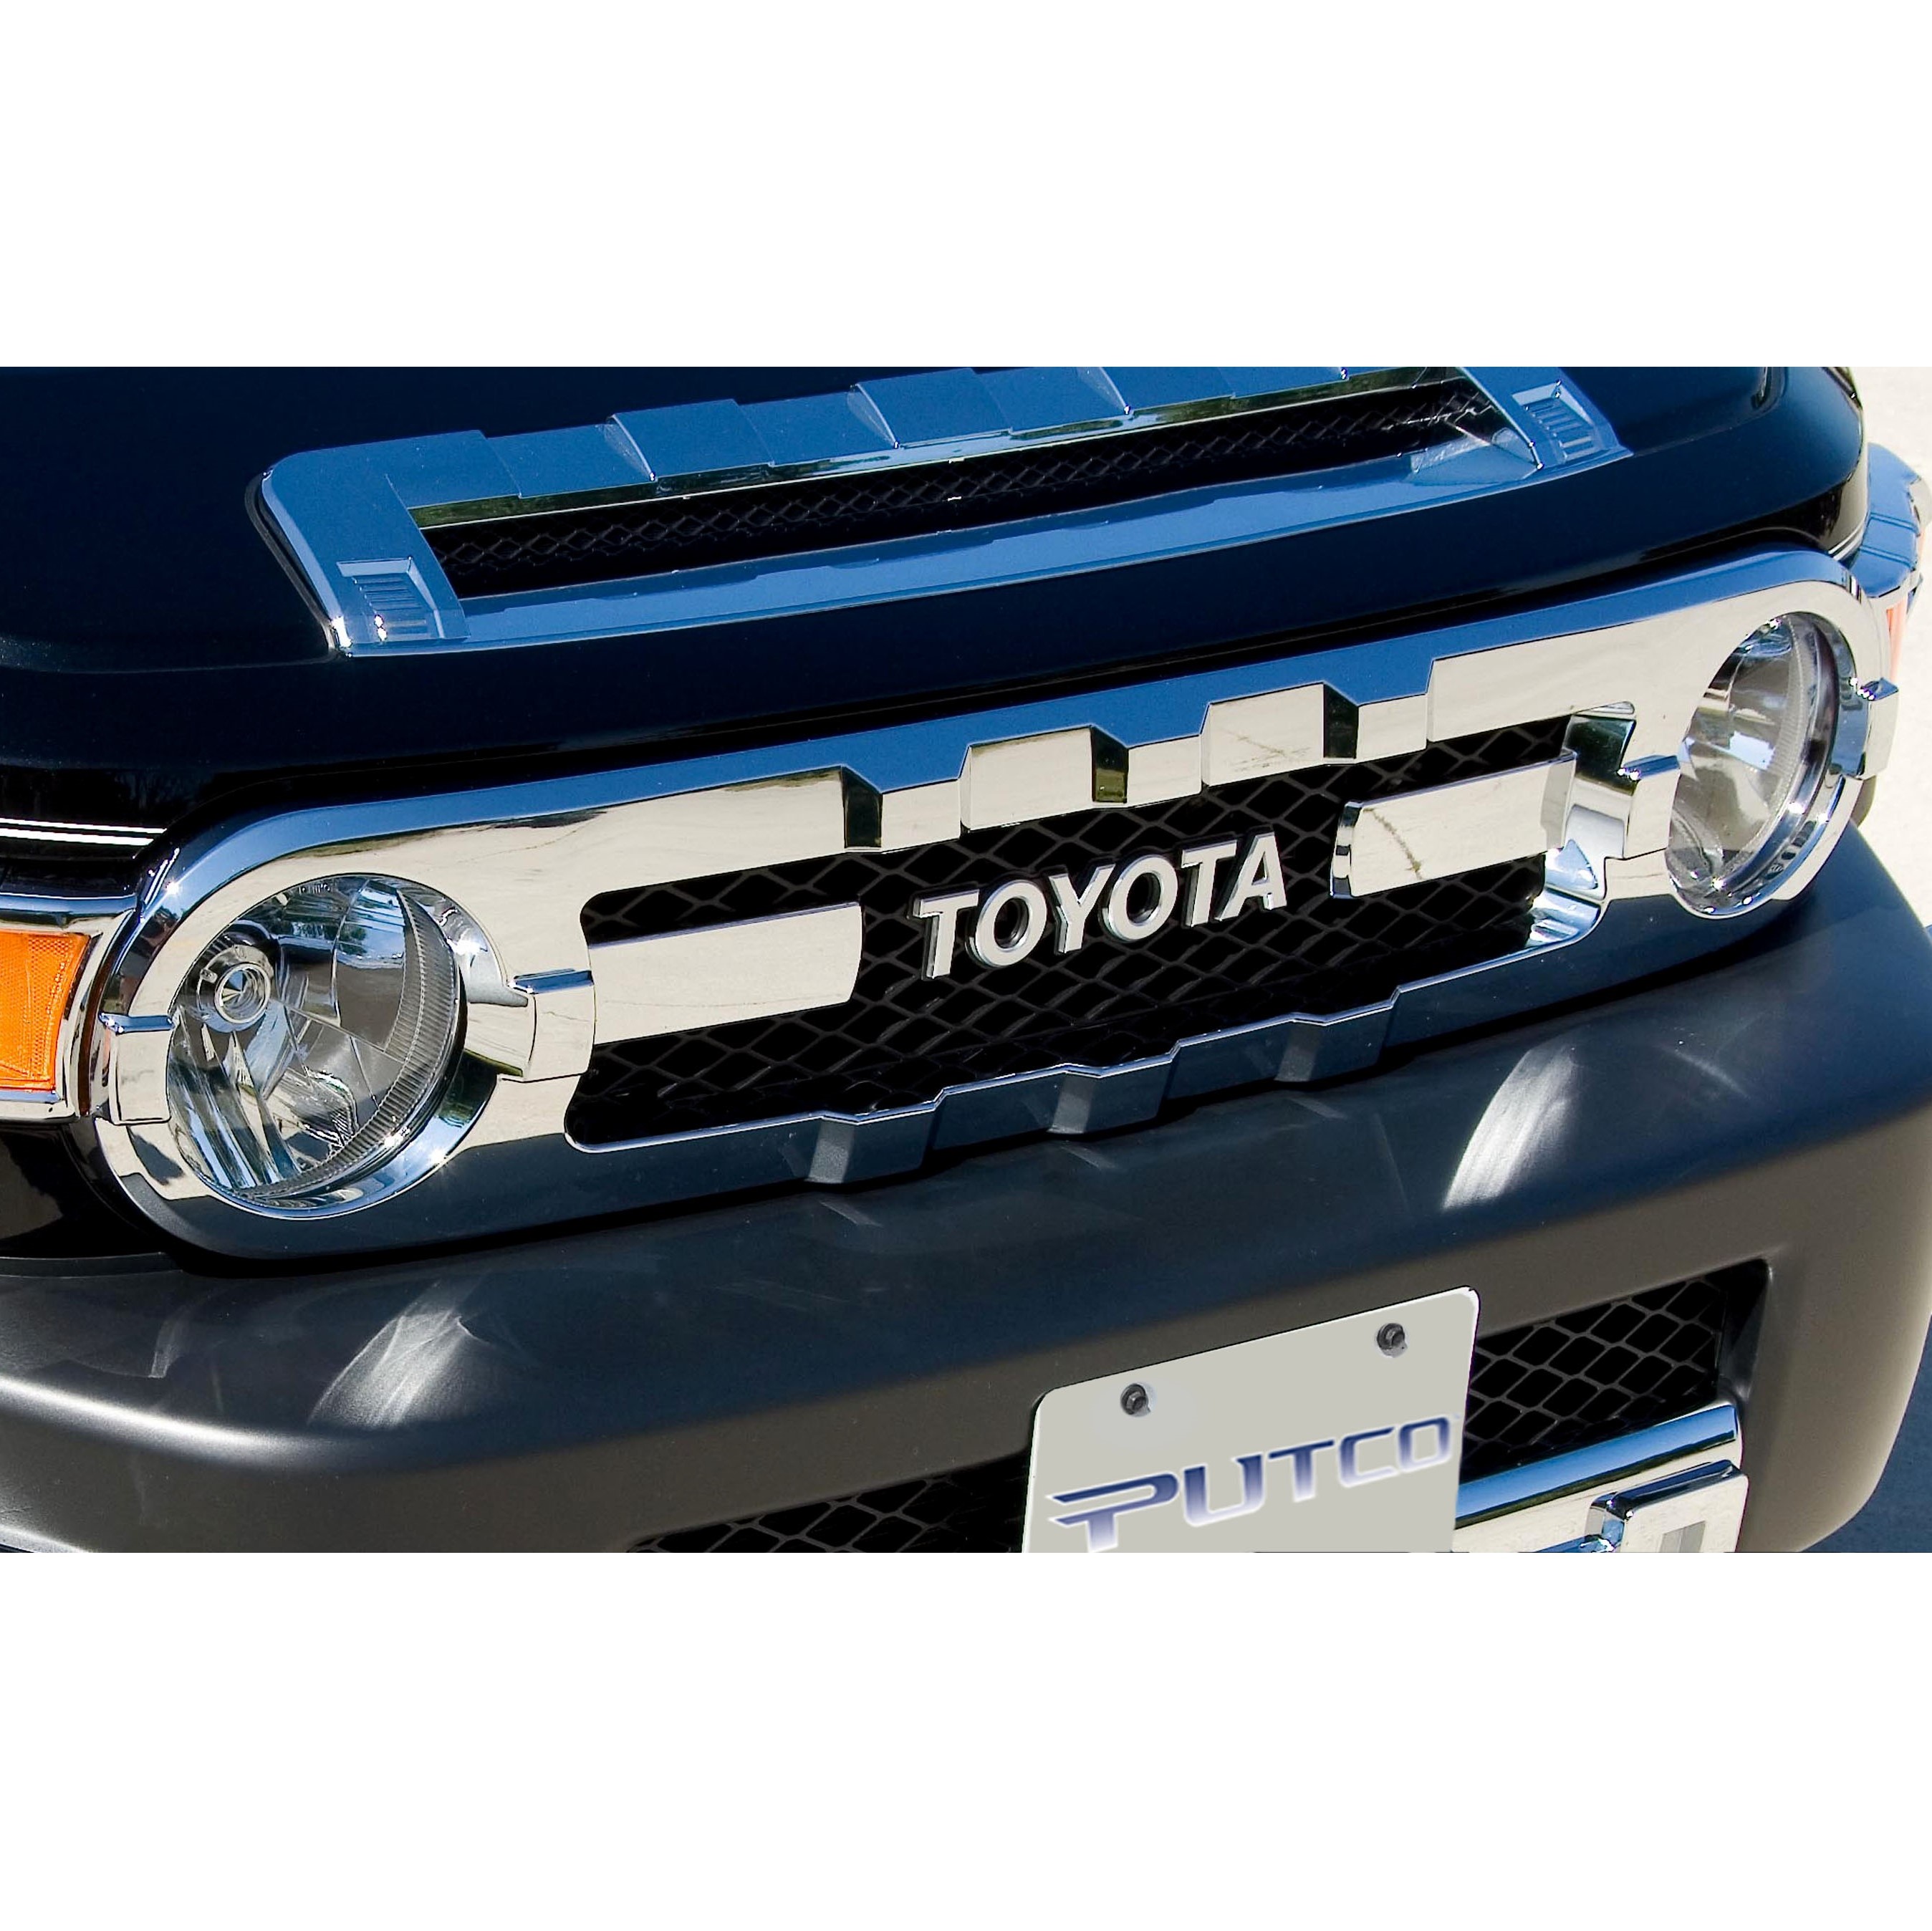 403522 - Putco Chrome Trim Grille Cover - Fits 2007-2014 Toyota FJ